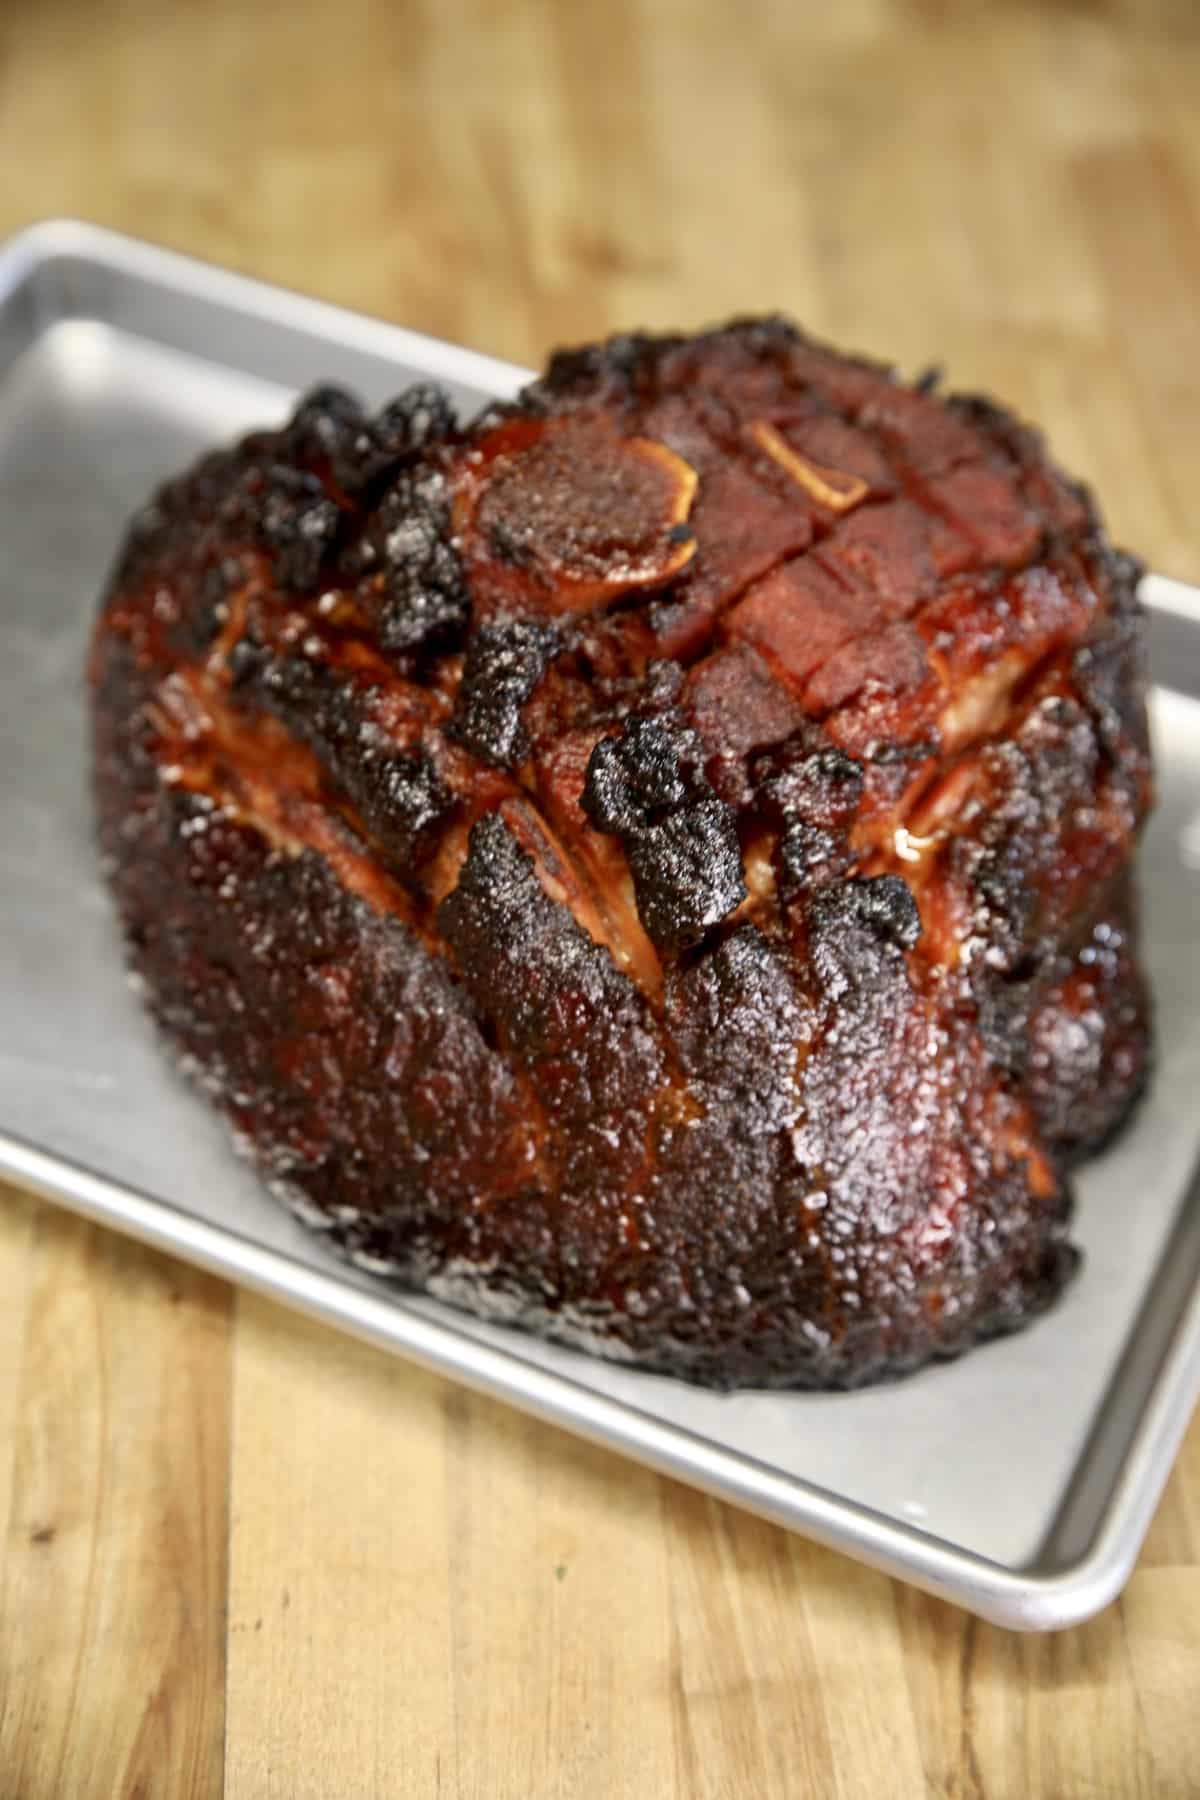 Grilled half ham on a sheet pan.